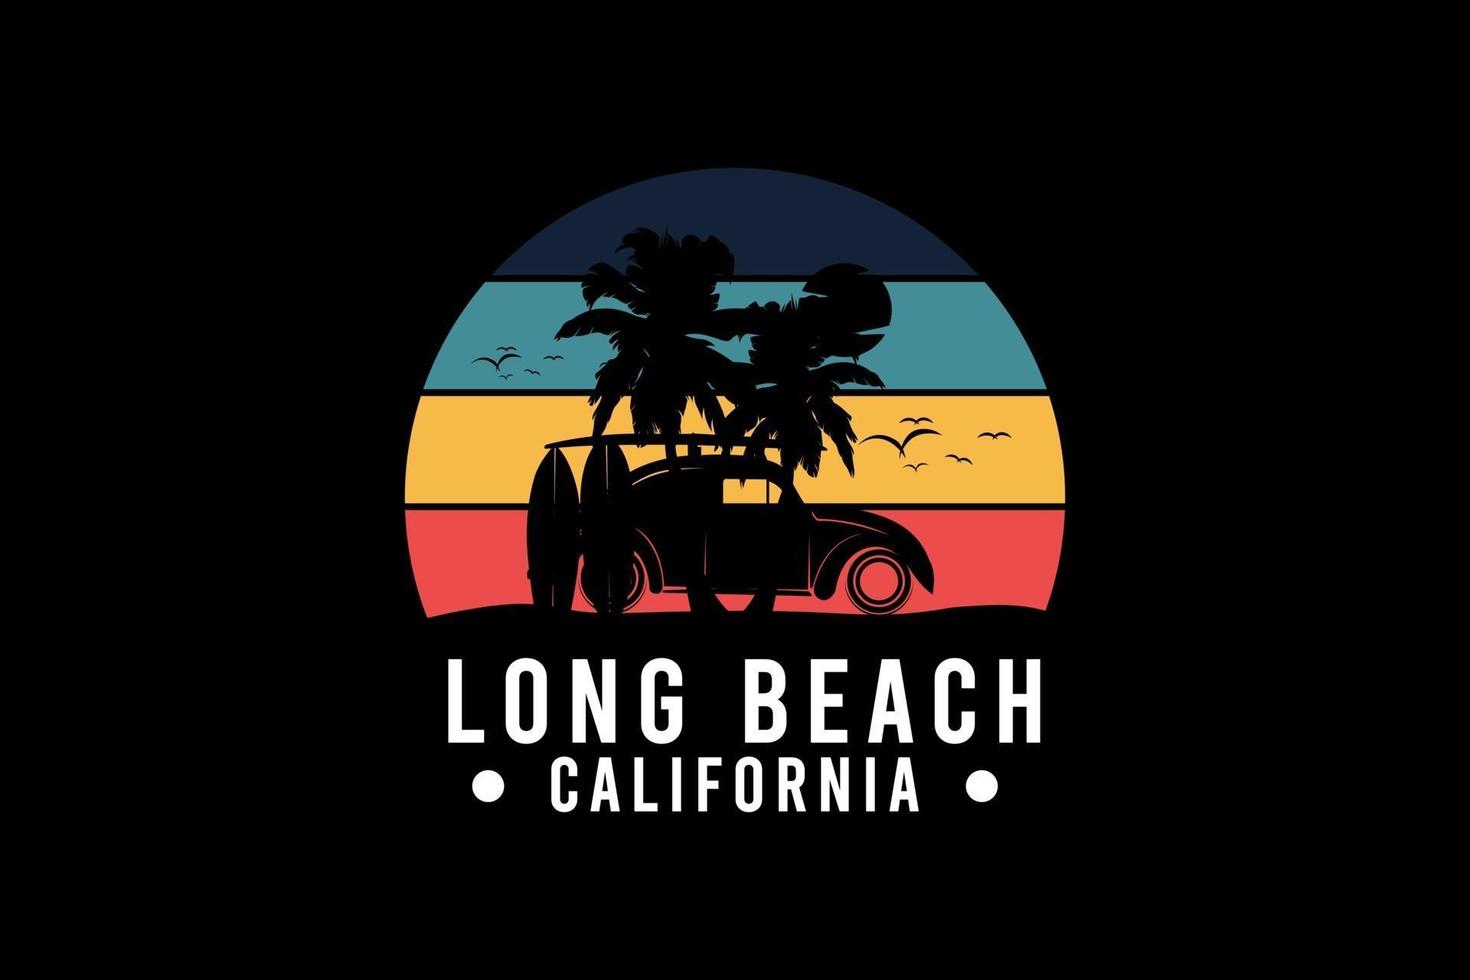 Long beach california,retro vintage style hand drawing illustration vector